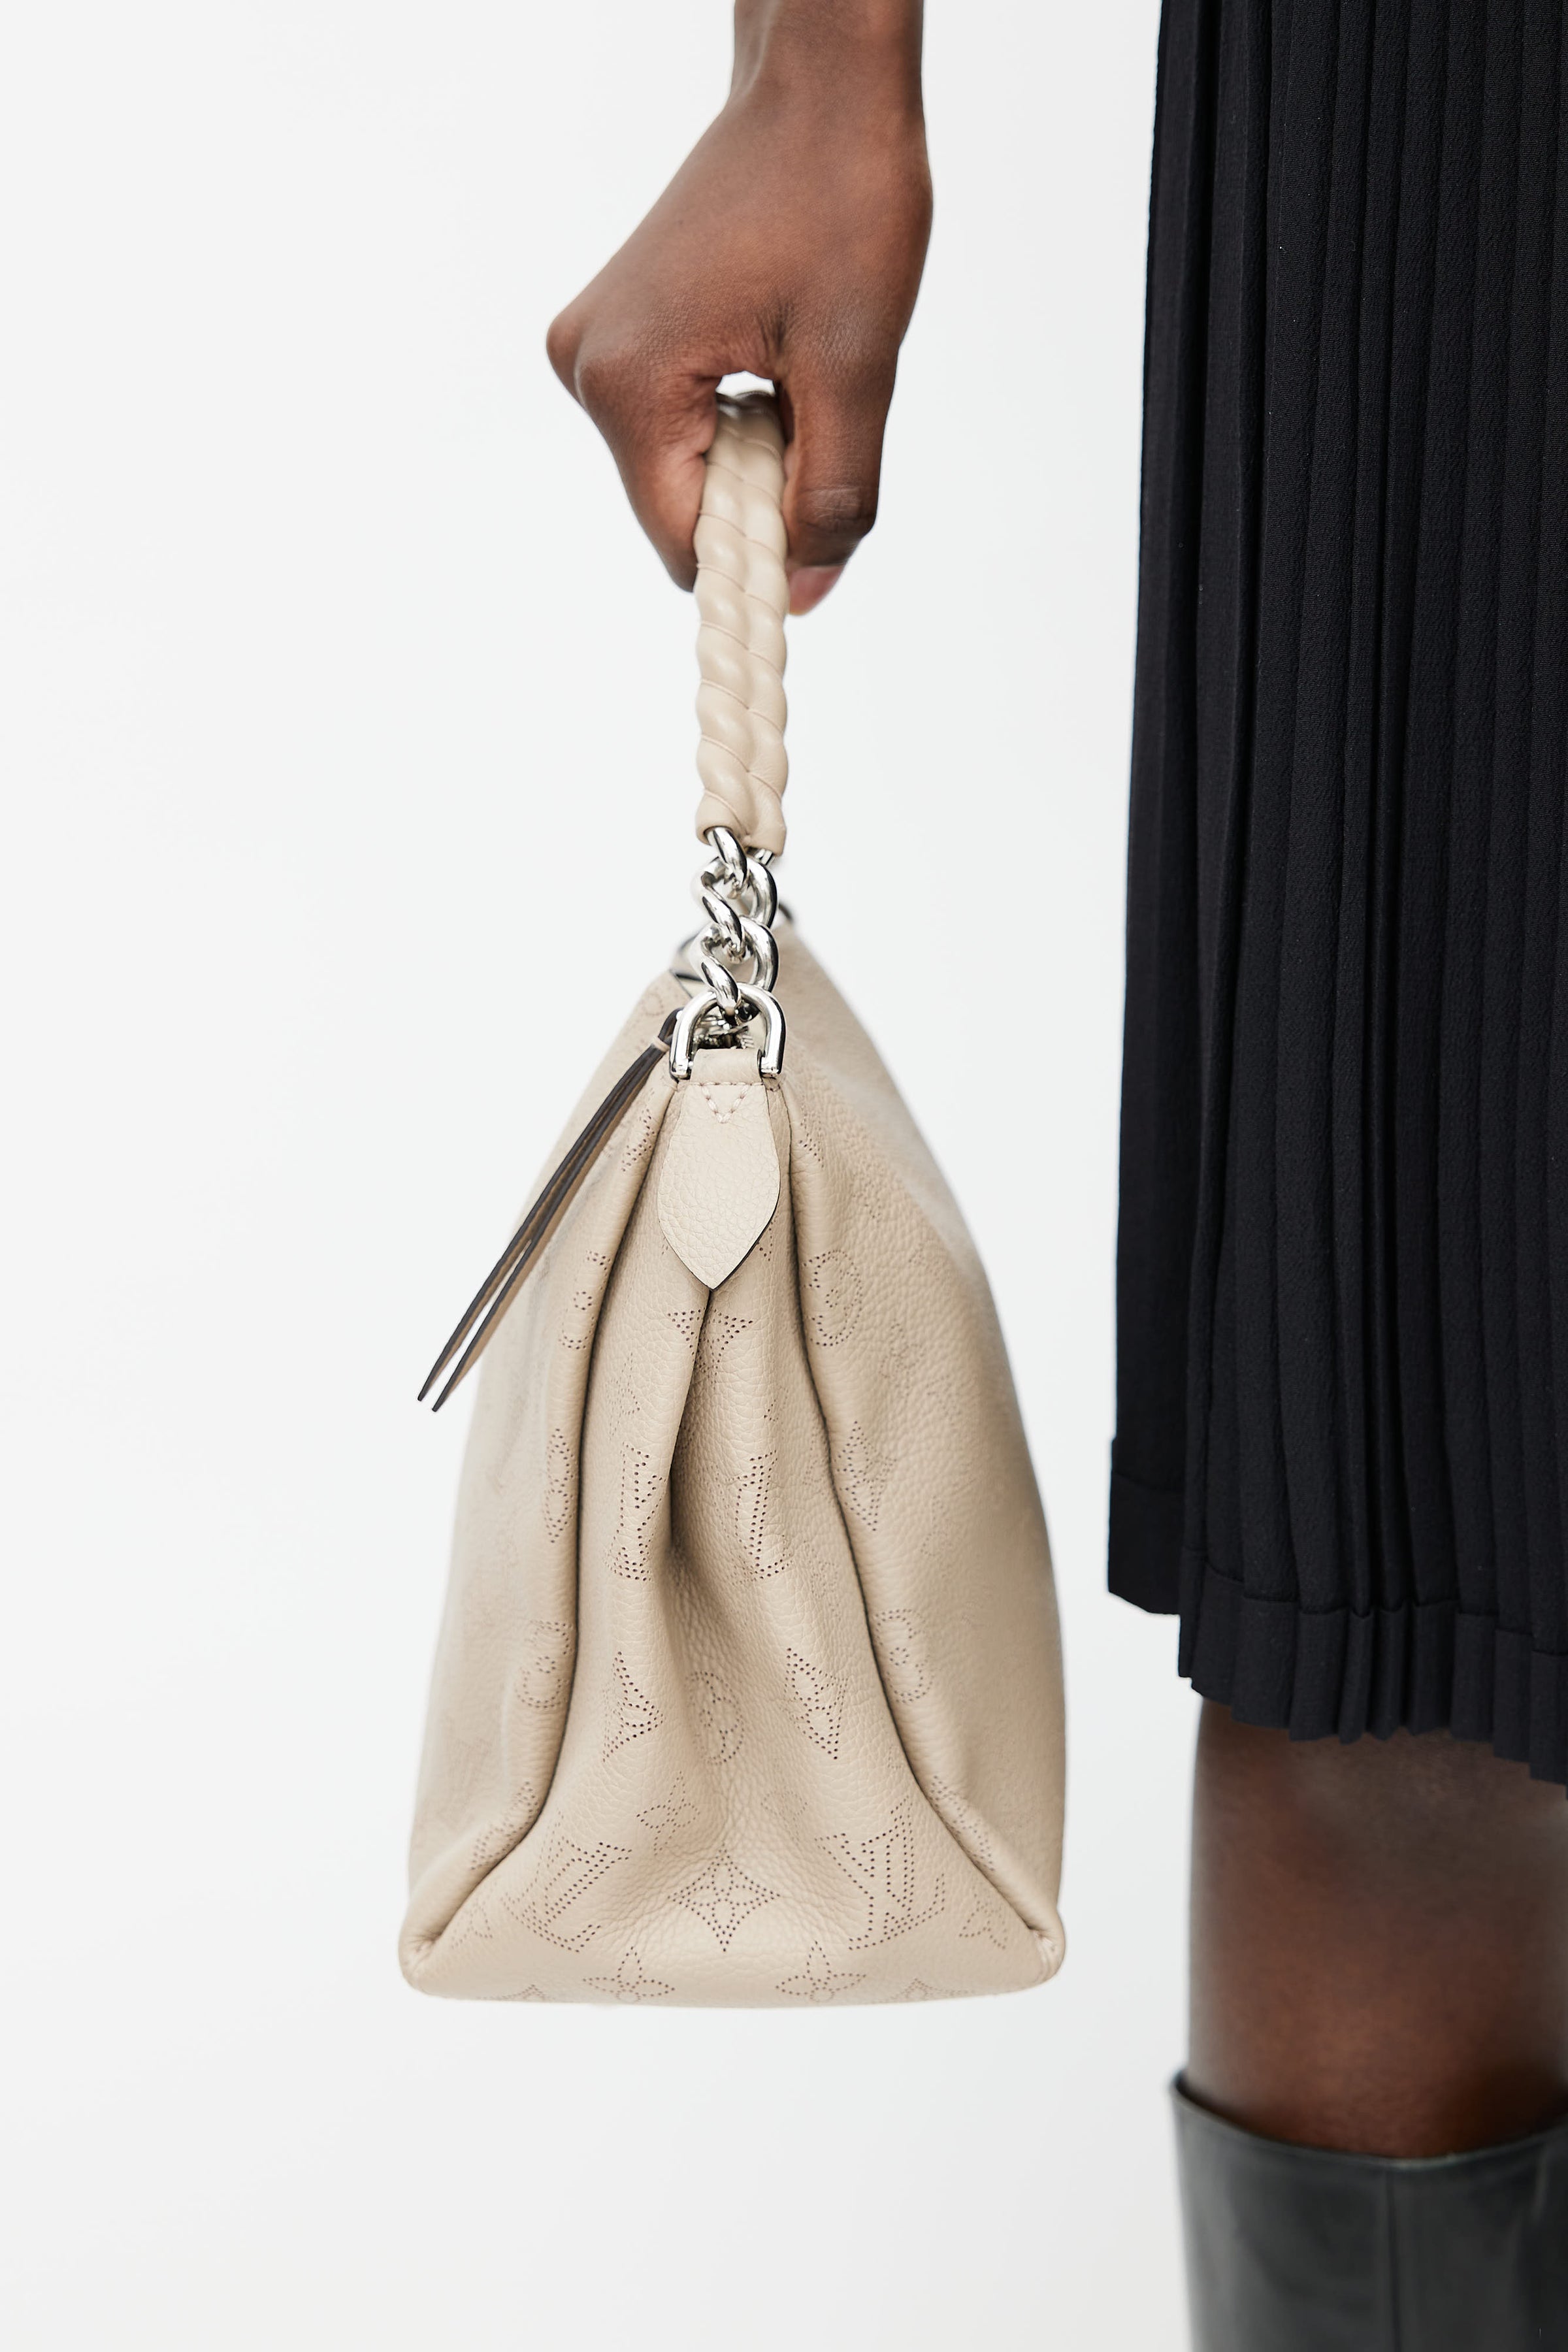 Louis Vuitton Beige Perforated Mahina Leather Babylone mm Galett Handbag